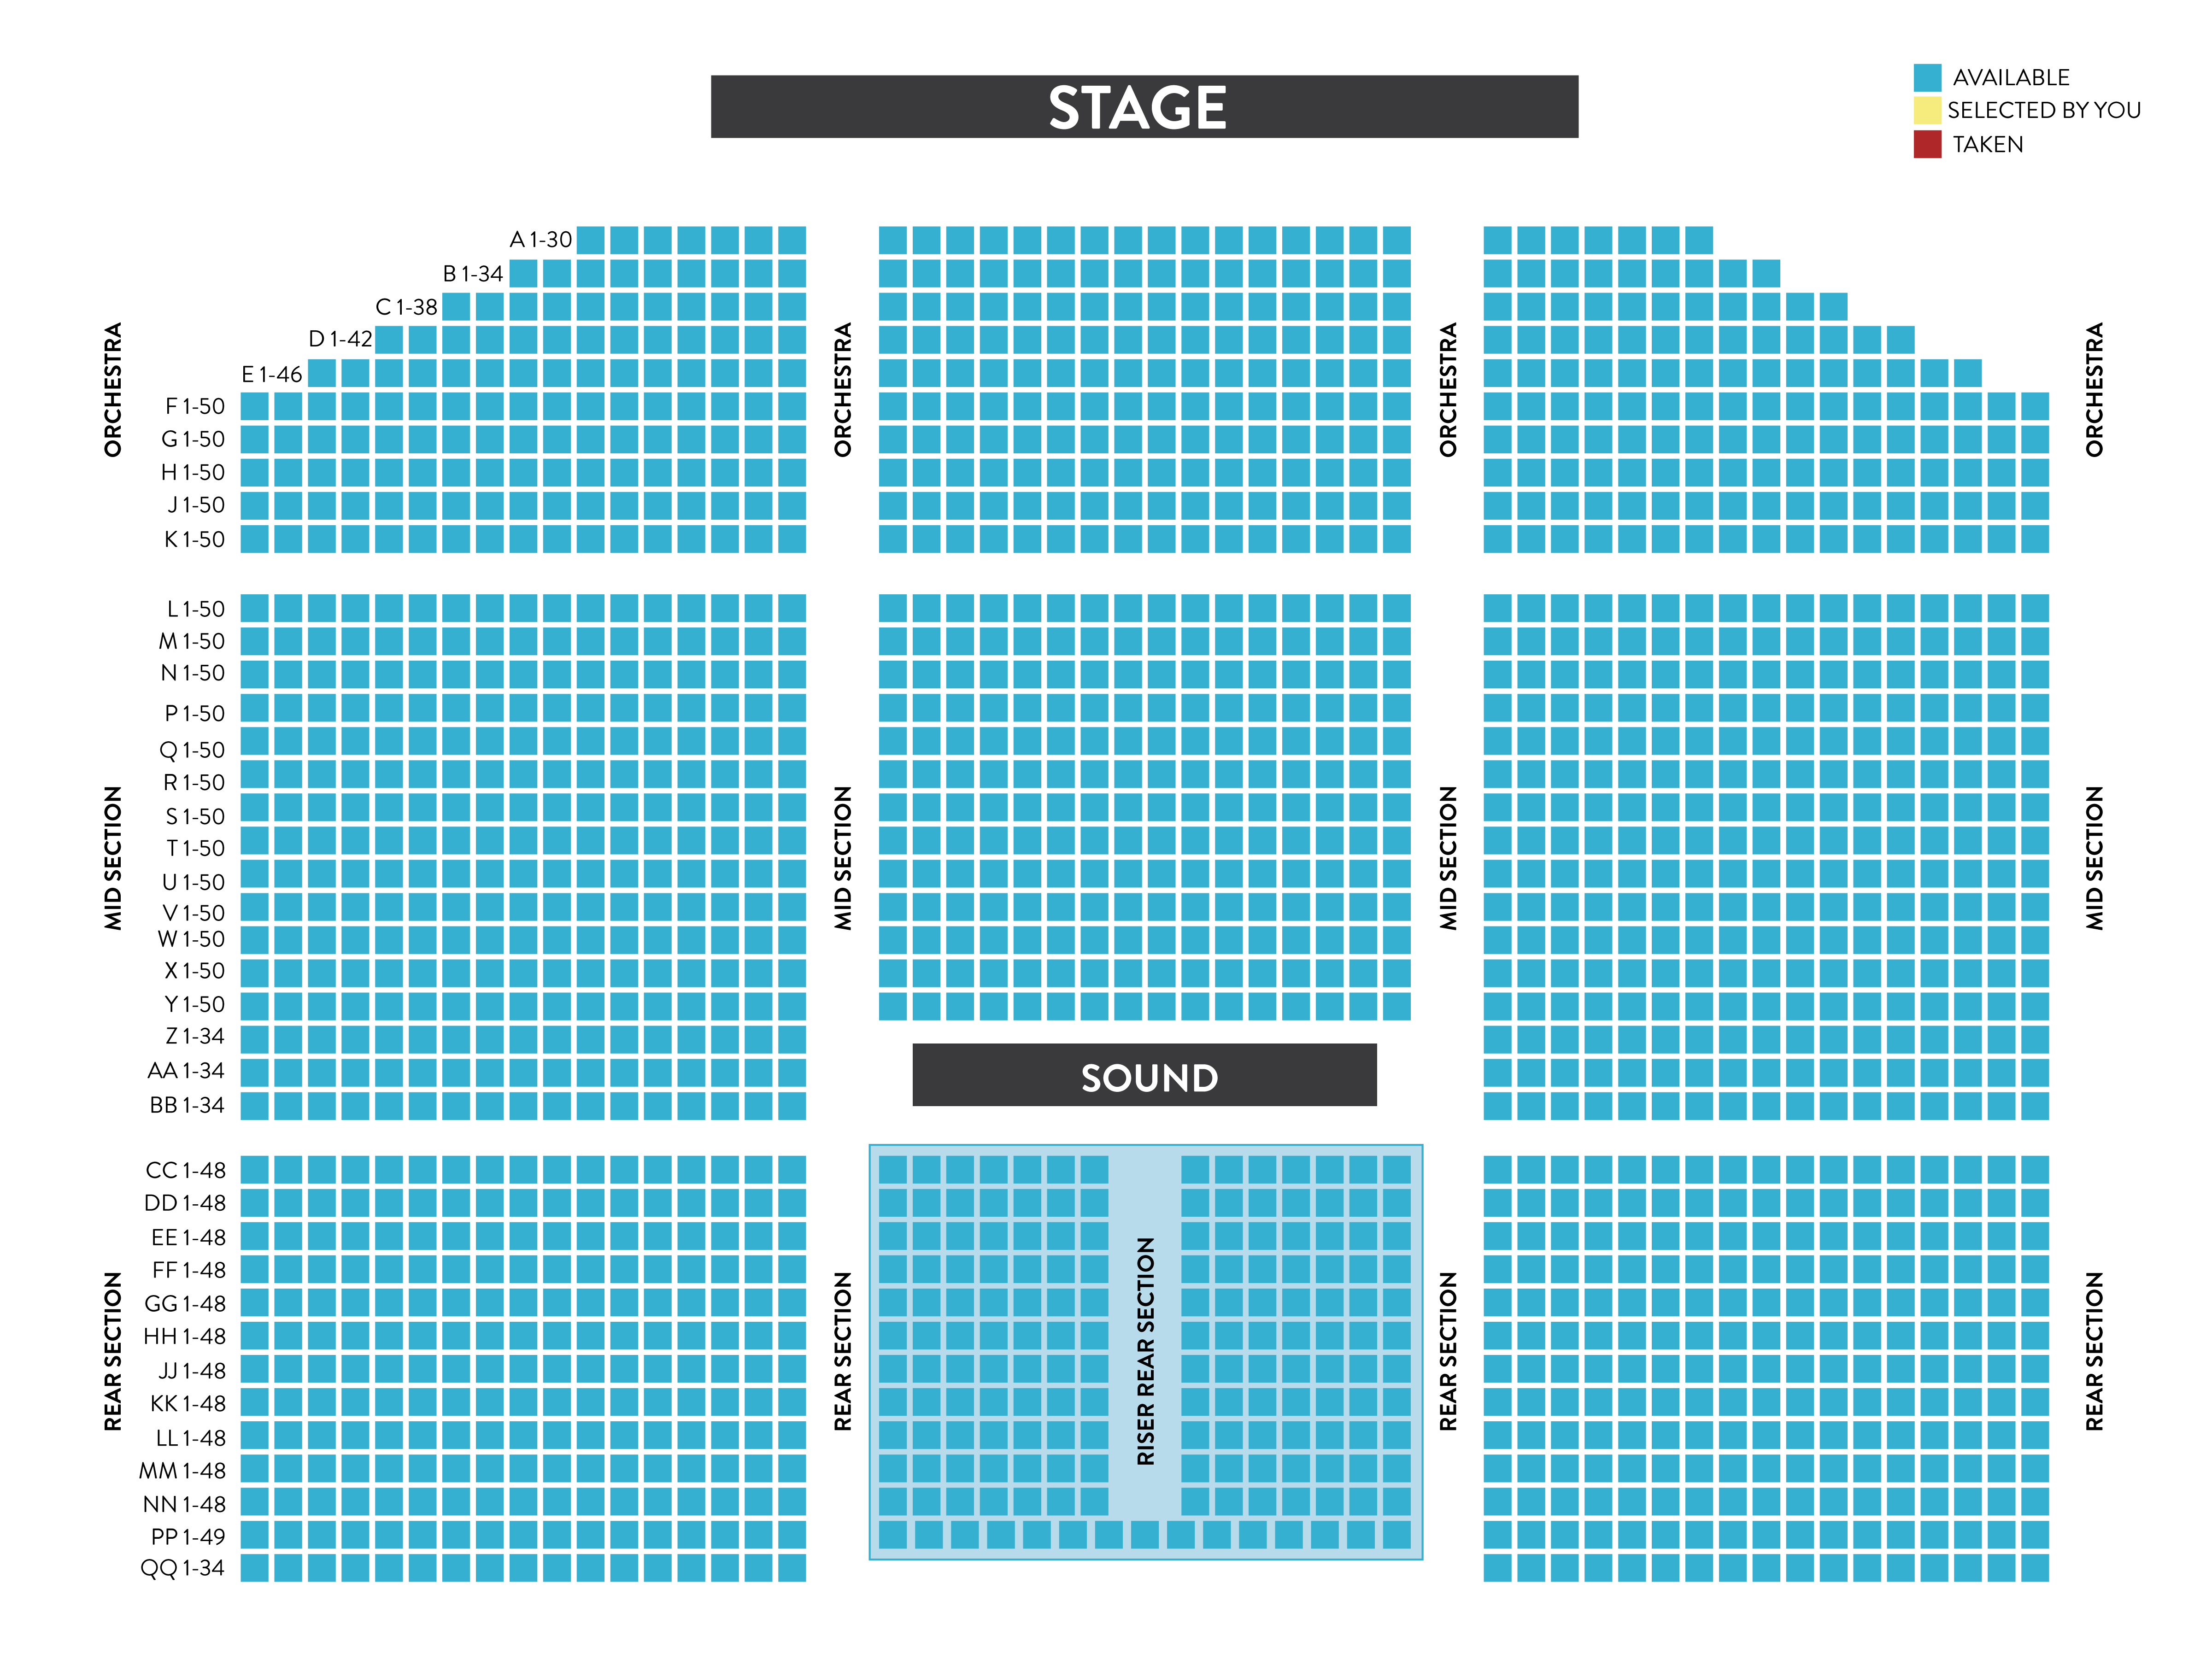 Murphy Theater Seating Chart